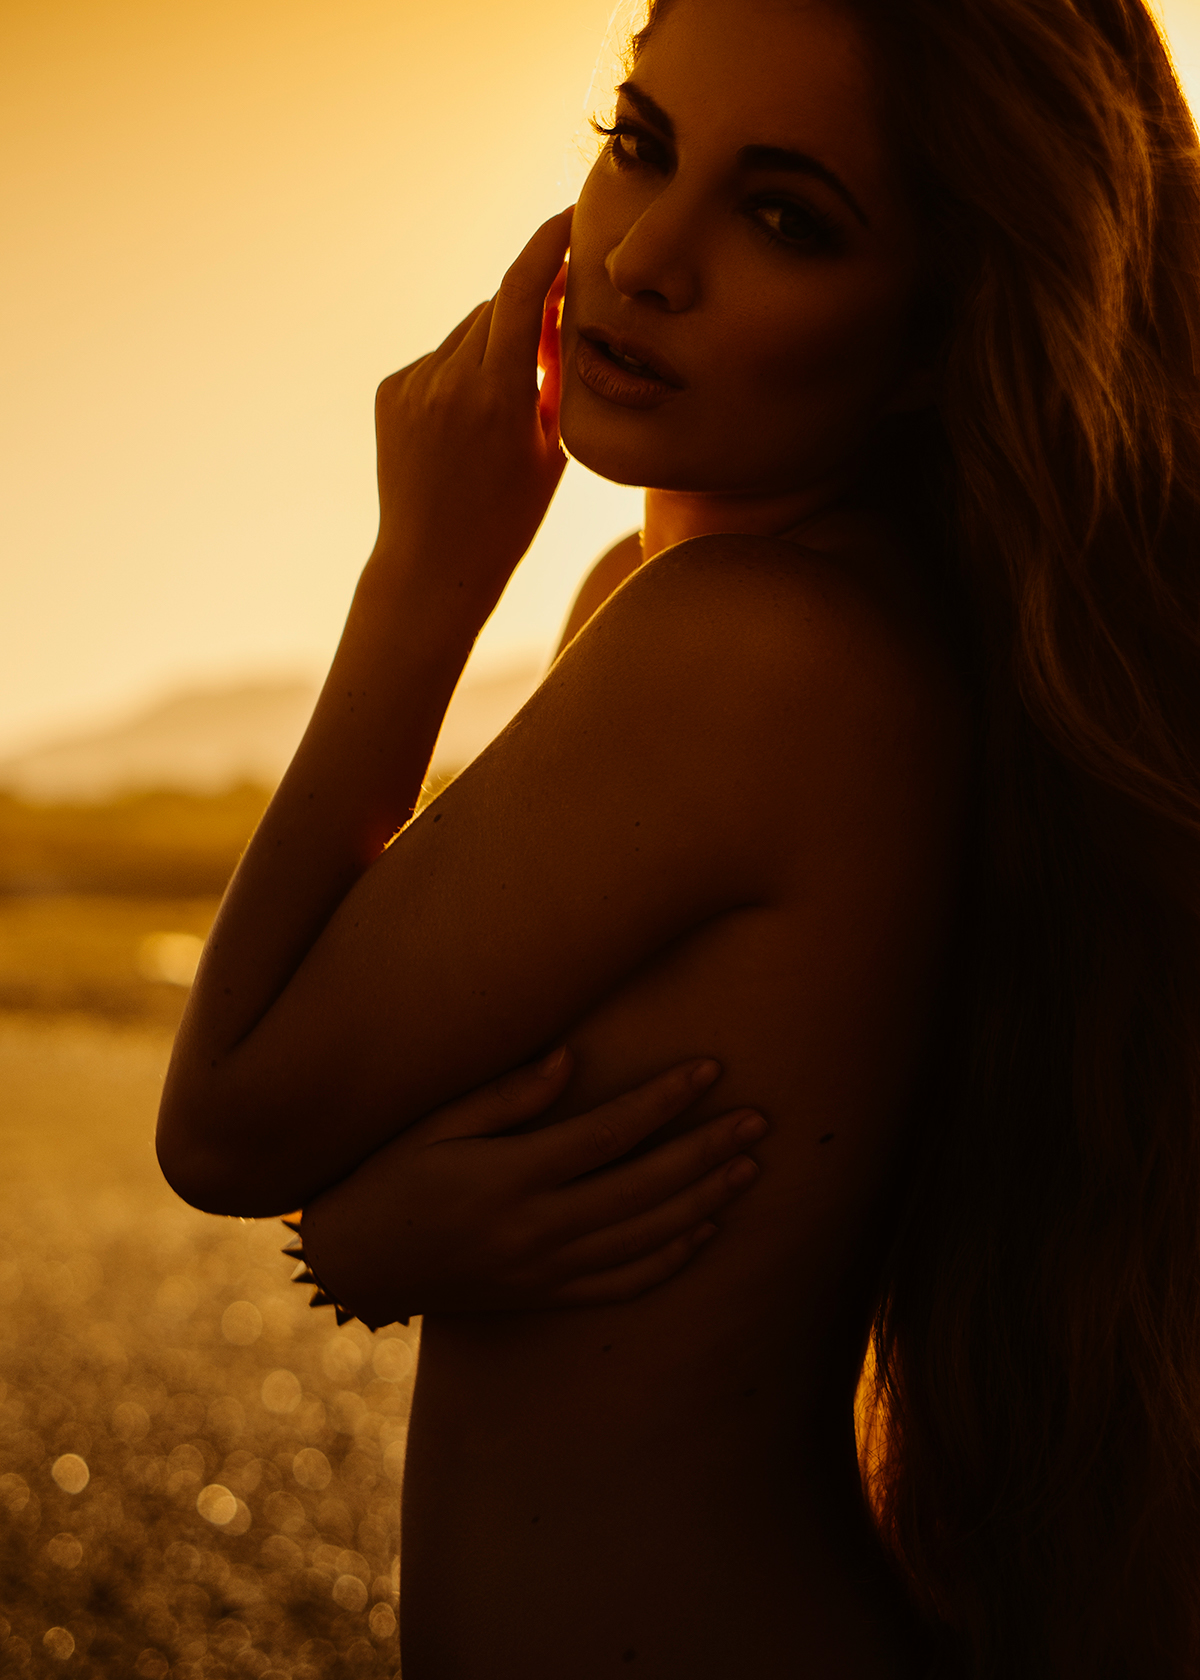 nextdoormodel model portrait girl Sun redscale art sensual editorial